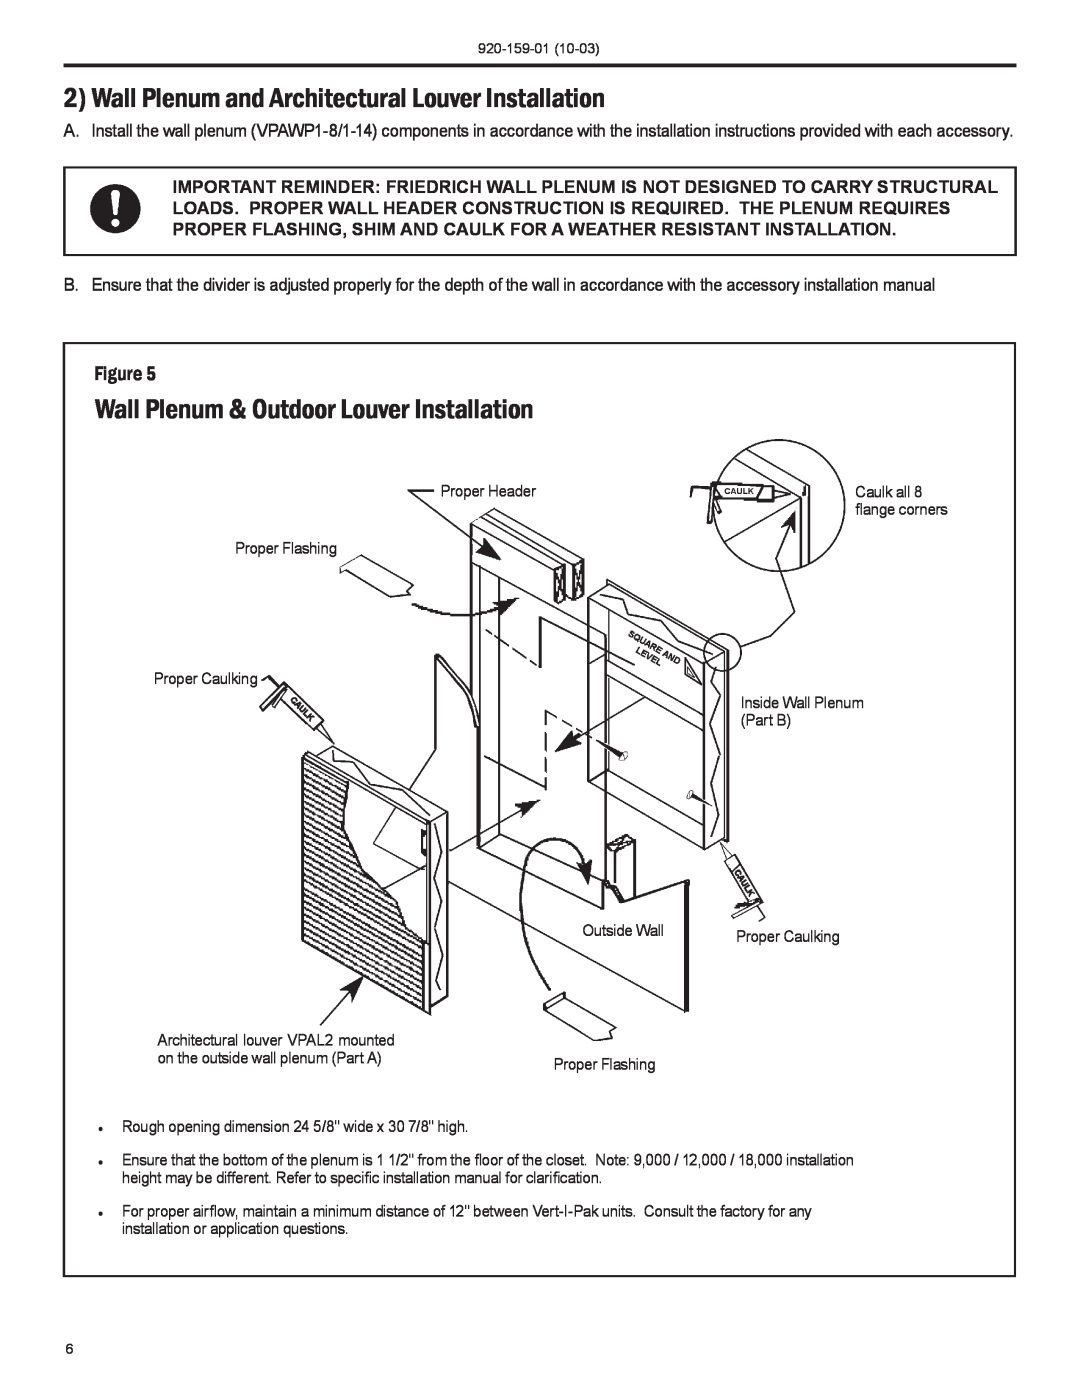 Friedrich 920-159-01 (10-03) operation manual Wall Plenum & Outdoor Louver Installation 